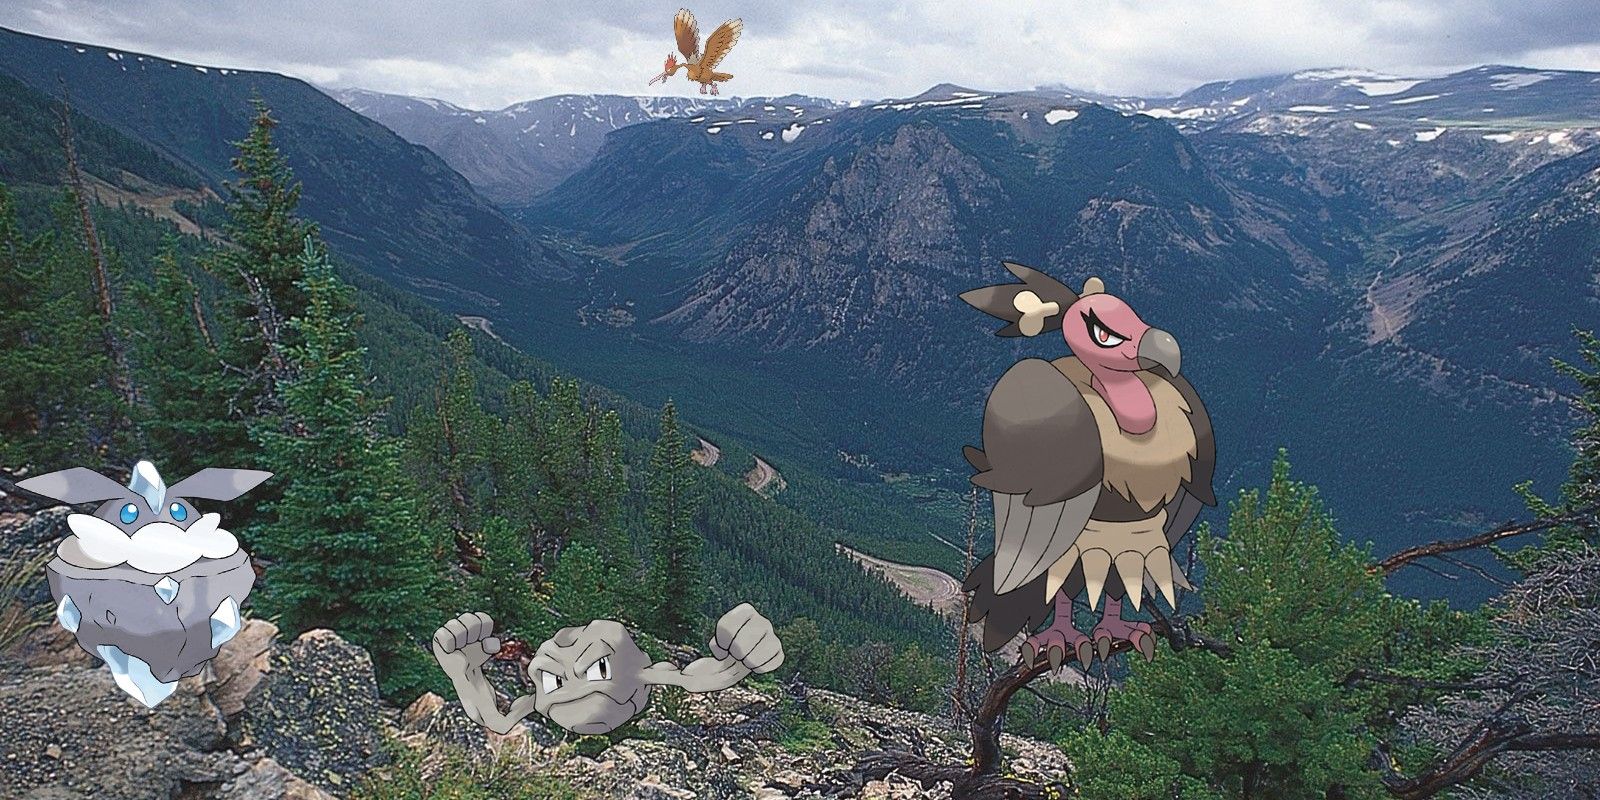 The Rocky Mountains iconic status makes it a perfect Pokémon inspiration.